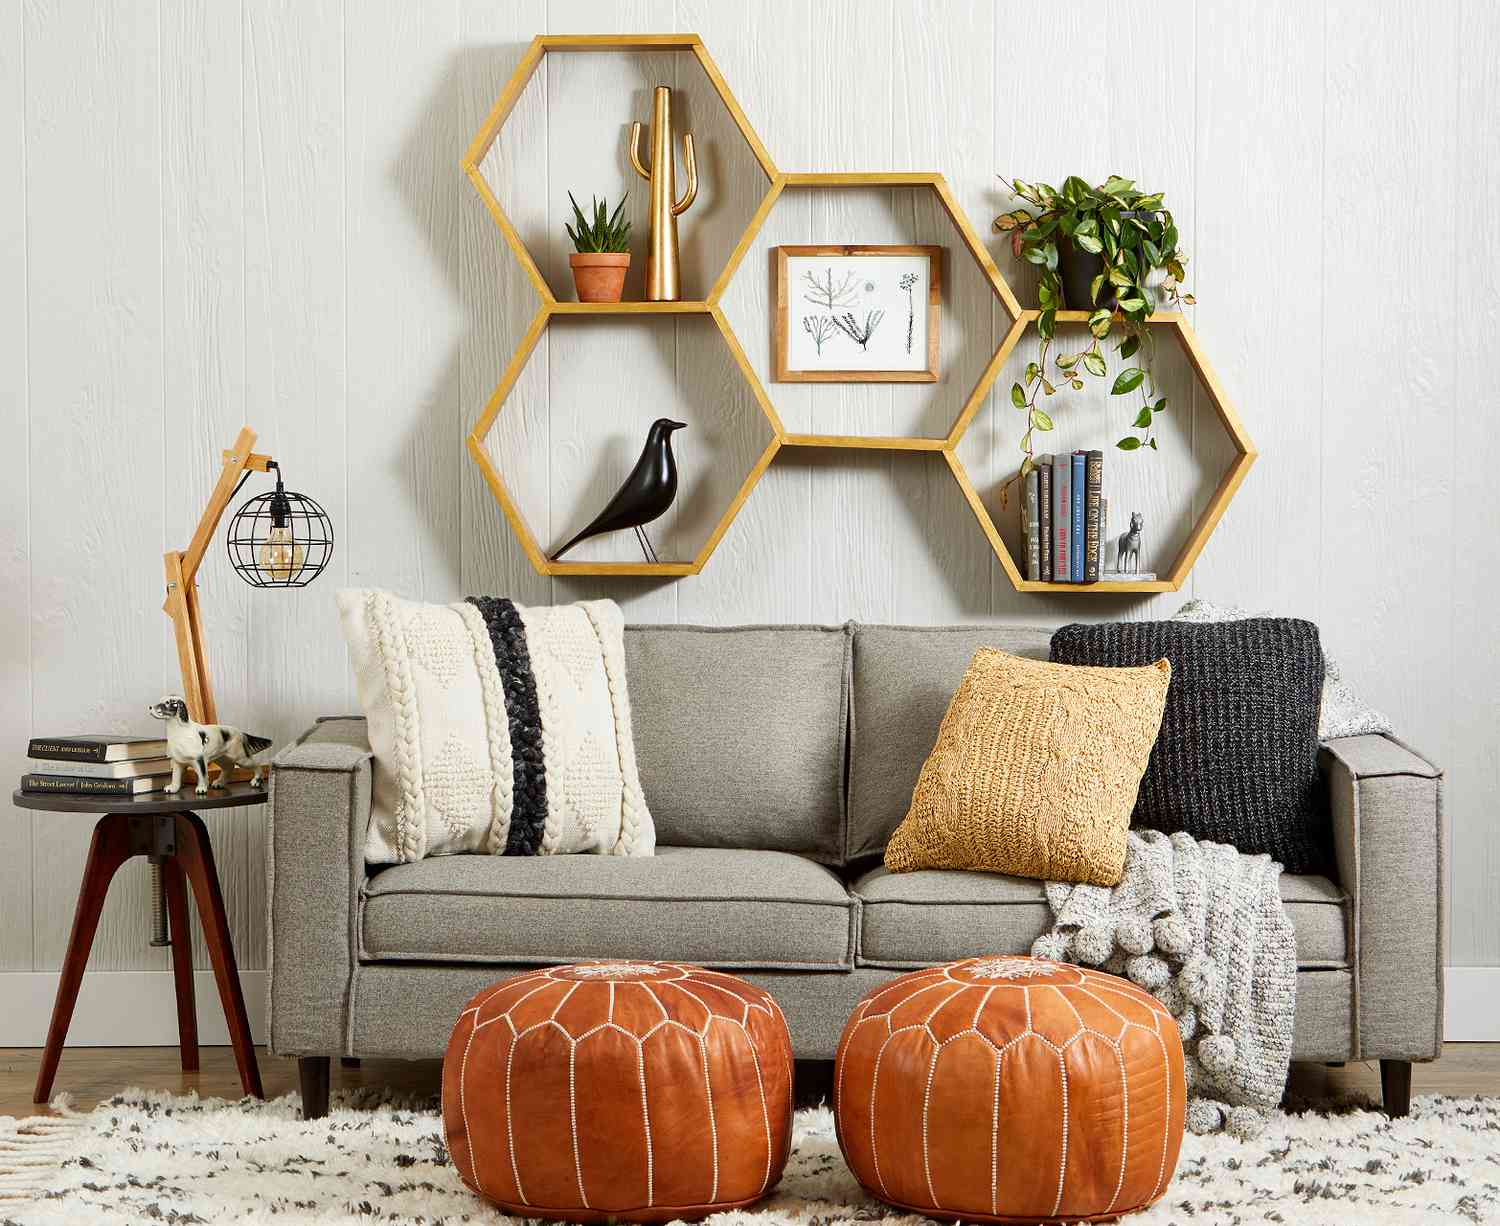 Diy Hexagon Shelves Better Homes, How To Make Honeycomb Wall Shelves